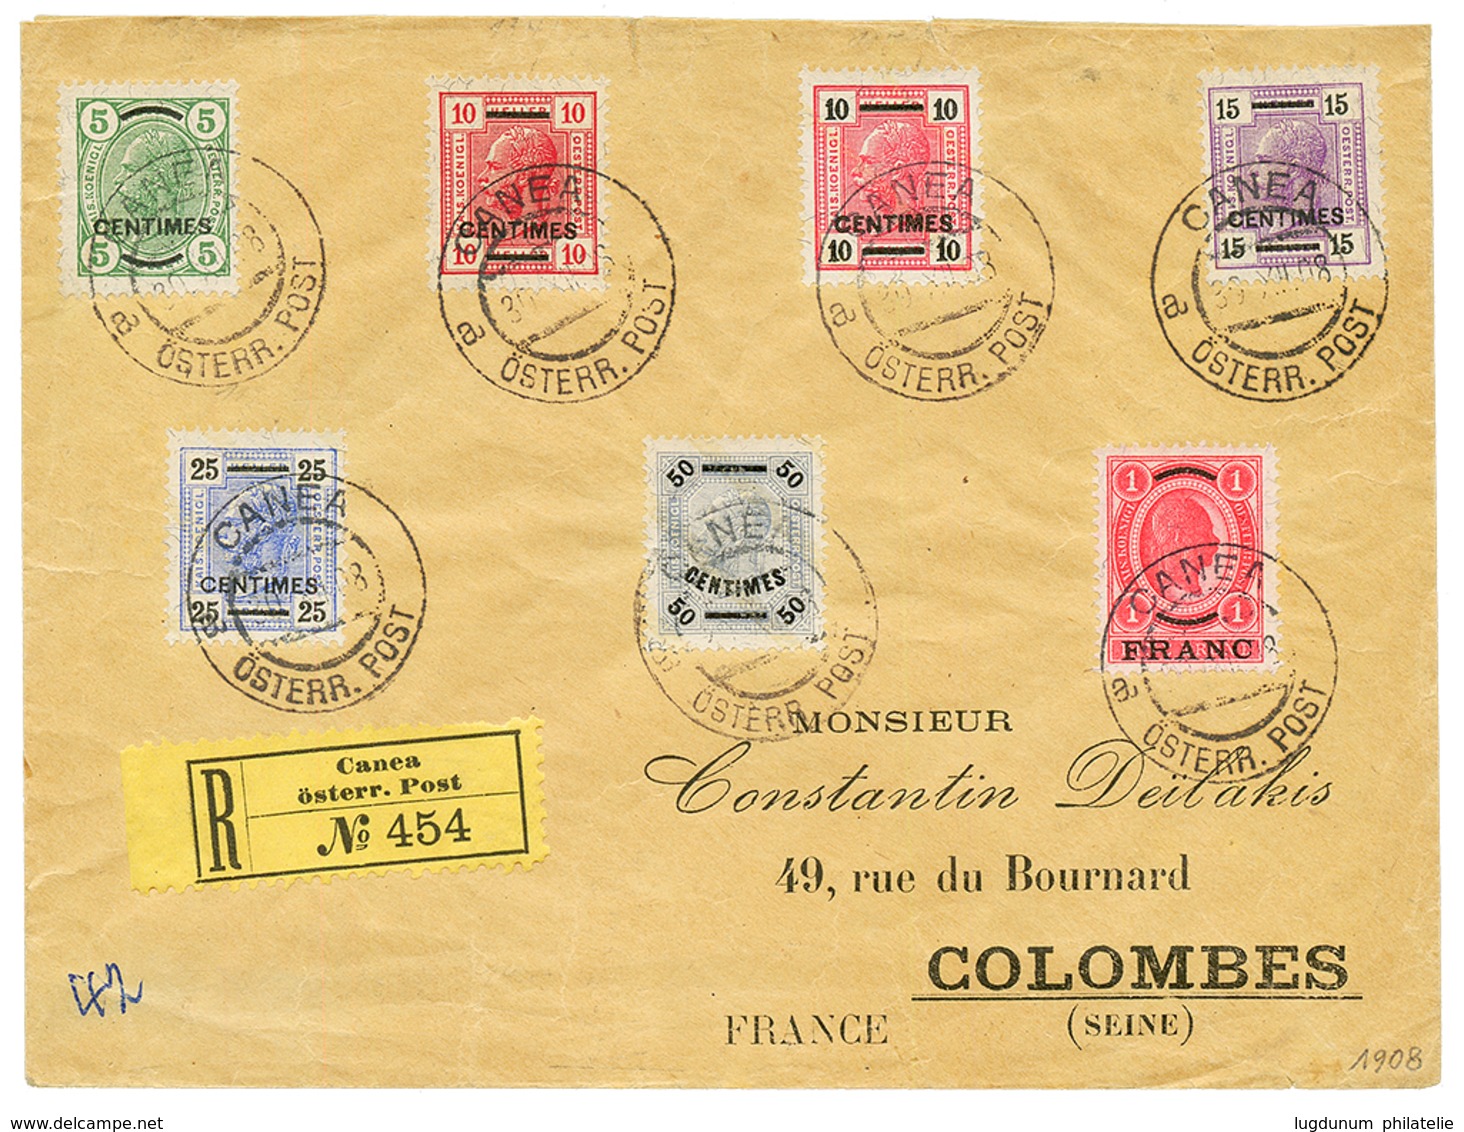 CANEA : 1908 5c To 1 FRANC Canc. CANEA On REGISTERED Envelope To FRANCE. Vvf. - Oriente Austriaco